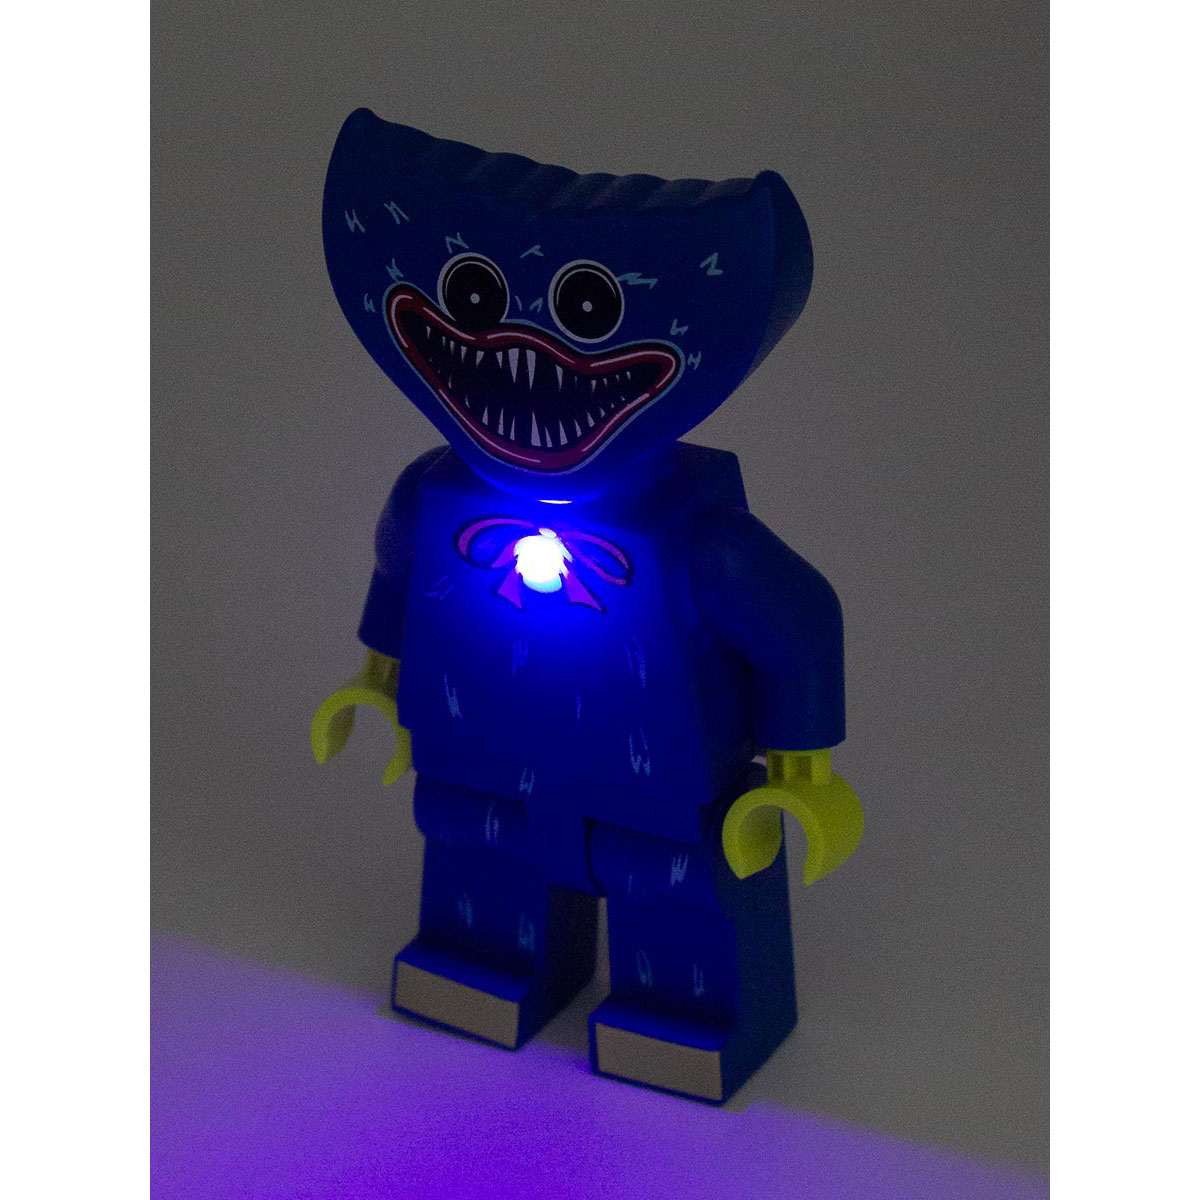 Фигурка Михи-Михи Хагги Вагги с подсветкой синяя 18 см - фото 7